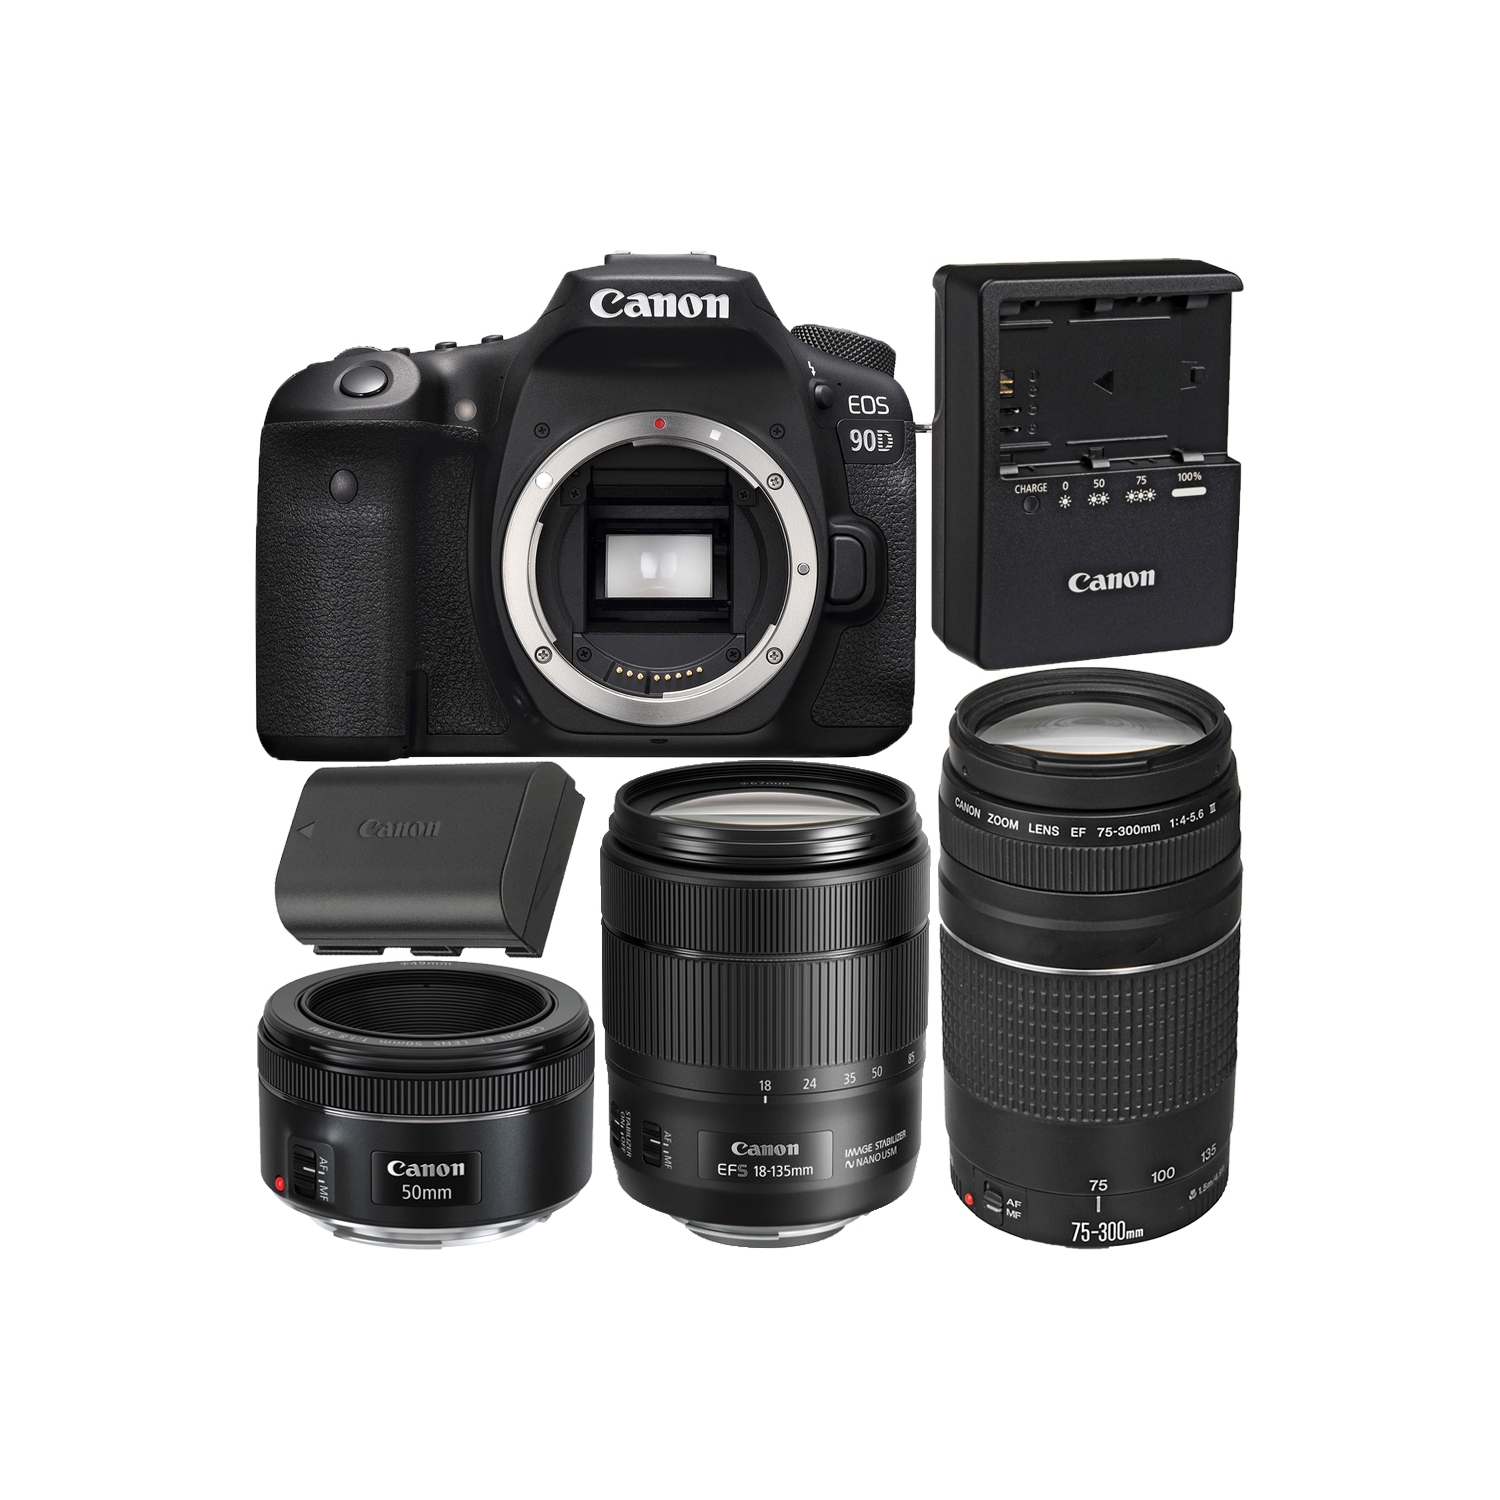 Canon EOS 90D DSLR Camera with 18-135mm f/3.5-5.6 IS USM Lens Bundle 5 - US Version w/ Seller Warranty